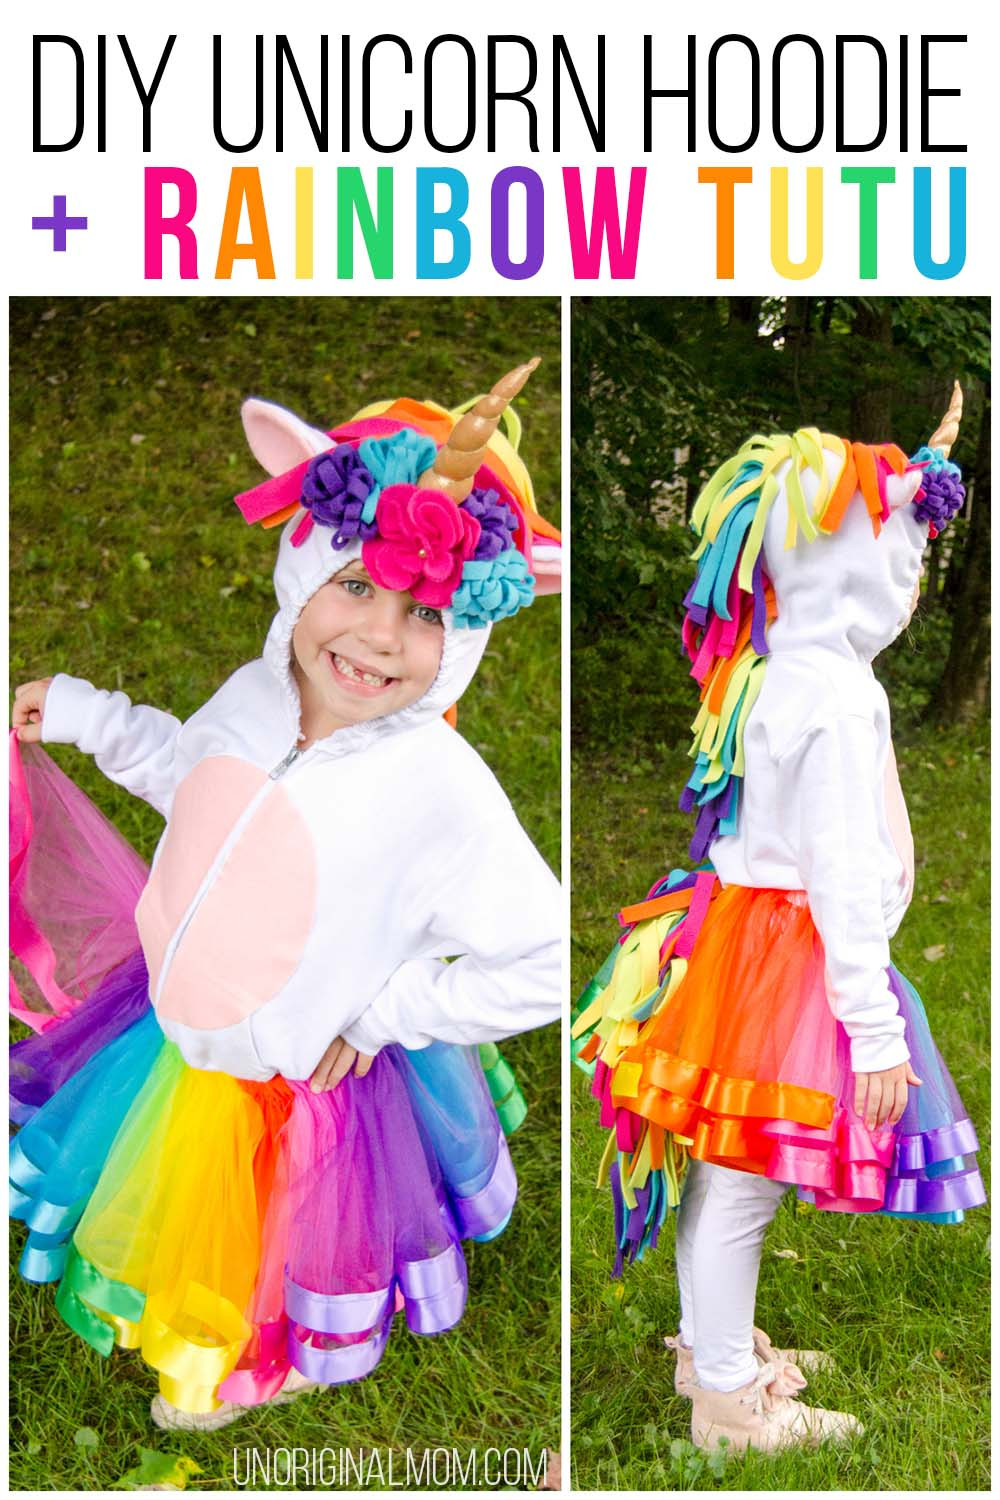 DIY Unicorn Costume For Girl
 DIY Unicorn Hoo Costume with Rainbow Tutu Tutorial